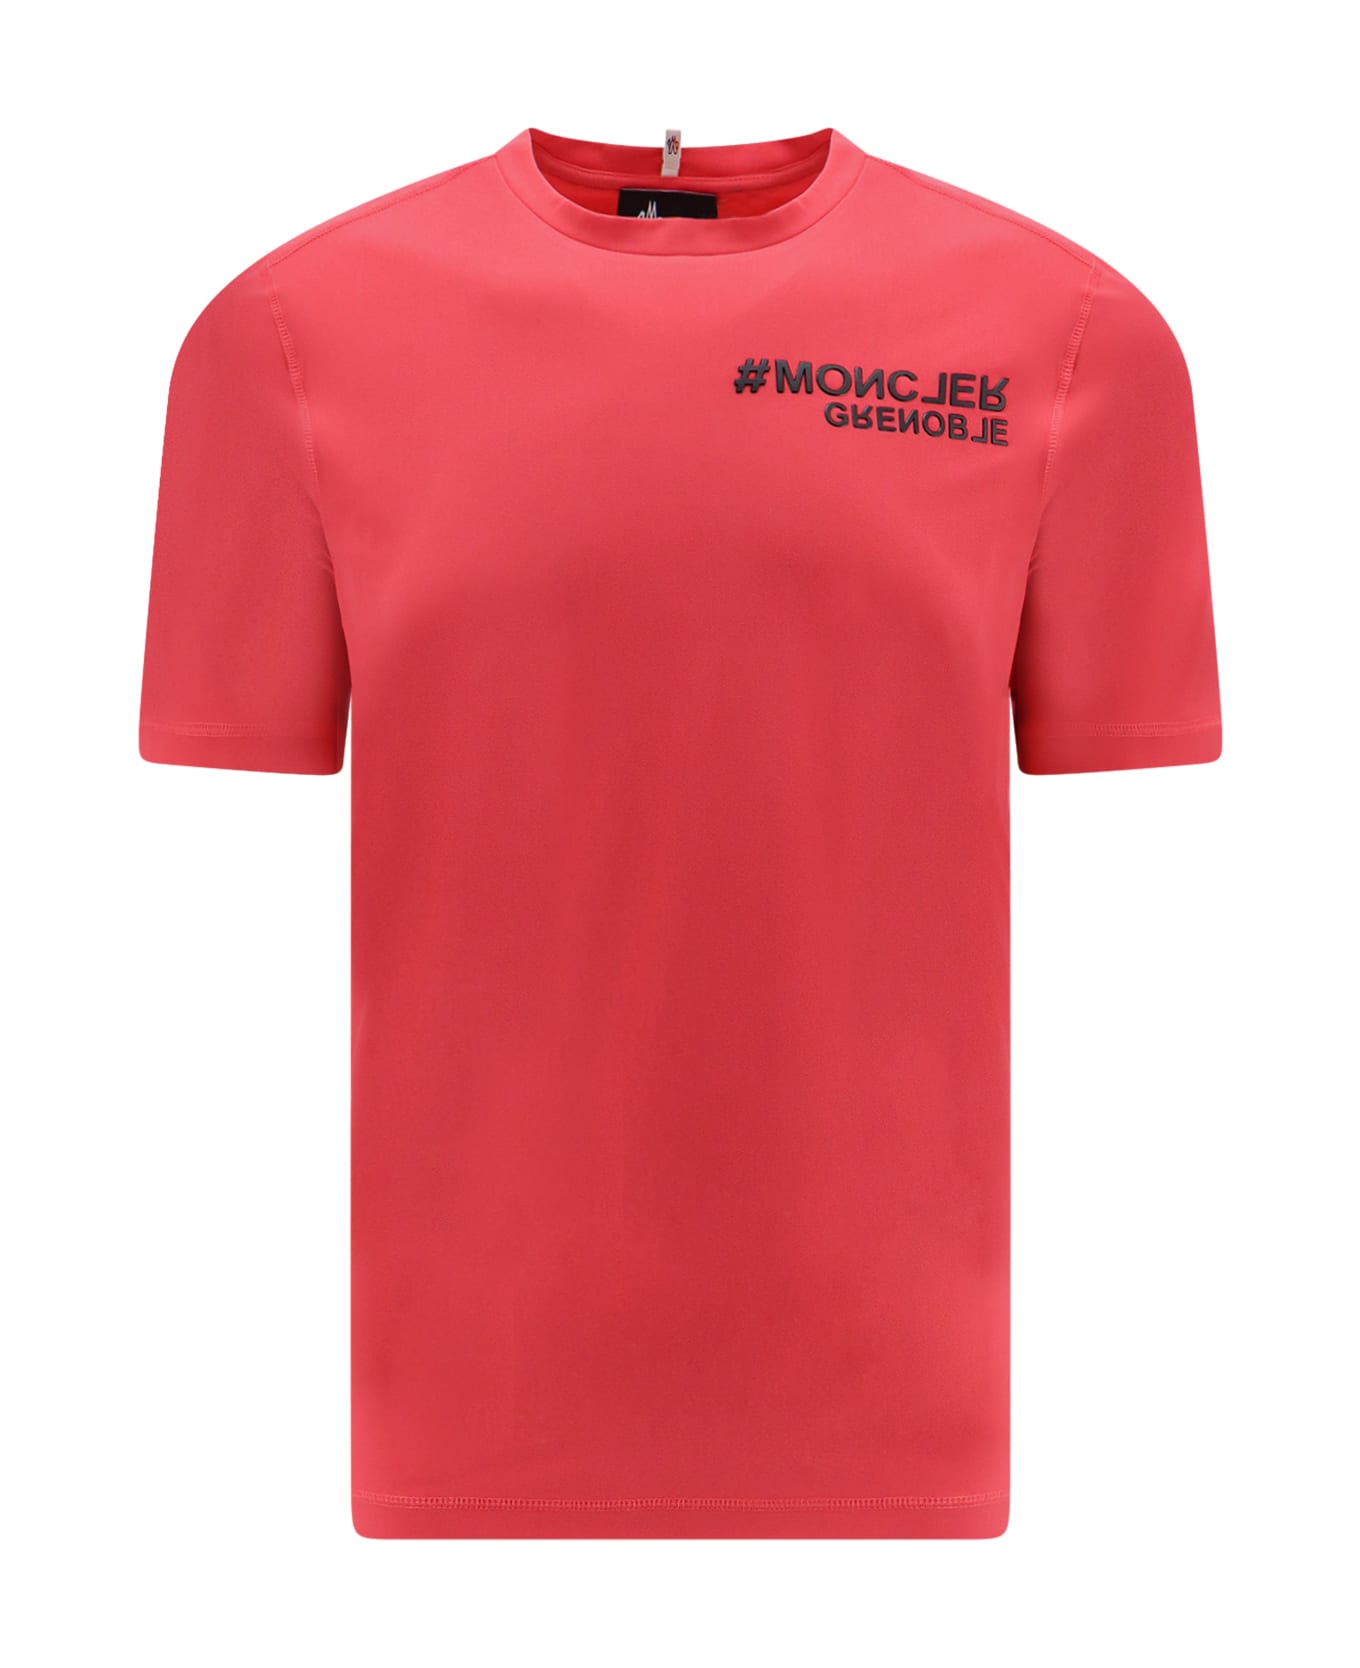 Moncler Grenoble T-shirt - Red